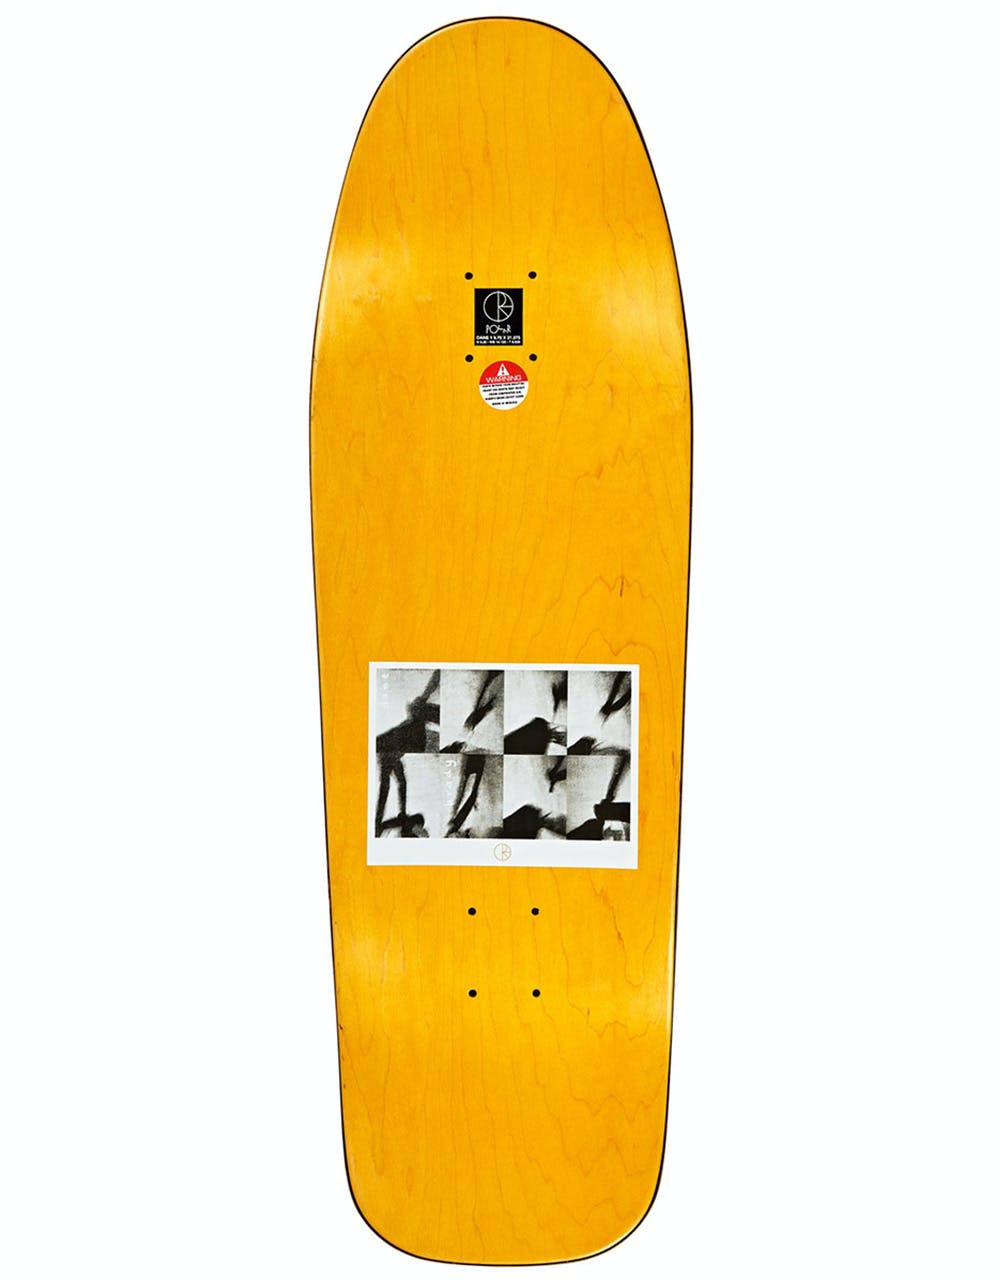 Polar Brady Out of Service Skateboard Deck - DANE 1 Shape 9.75"